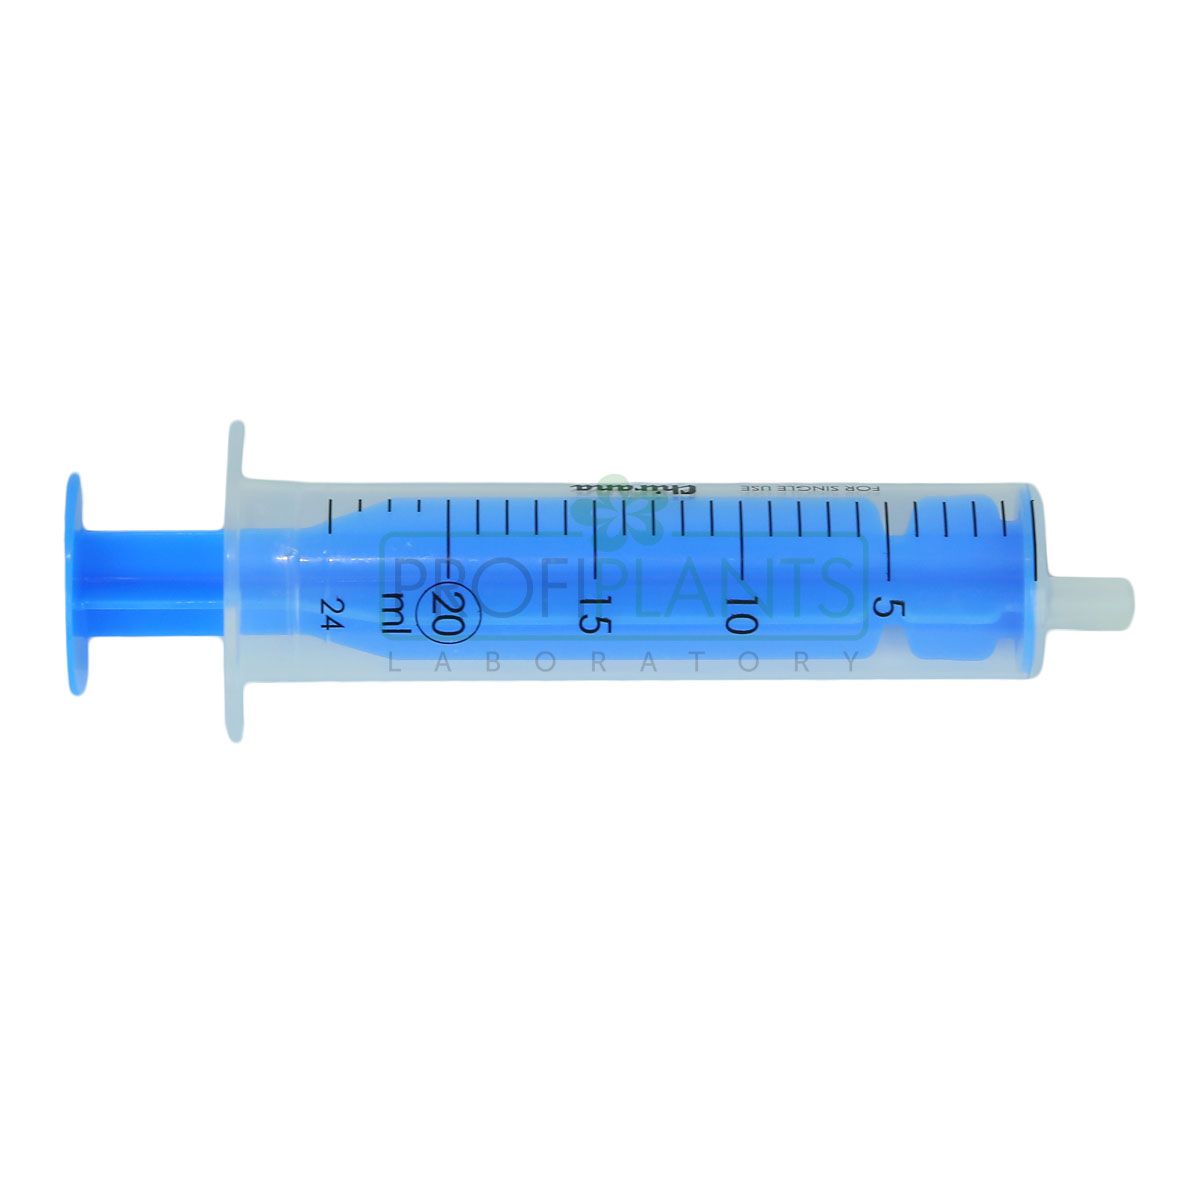 20 ml syringe plunger - 1pc Chirana